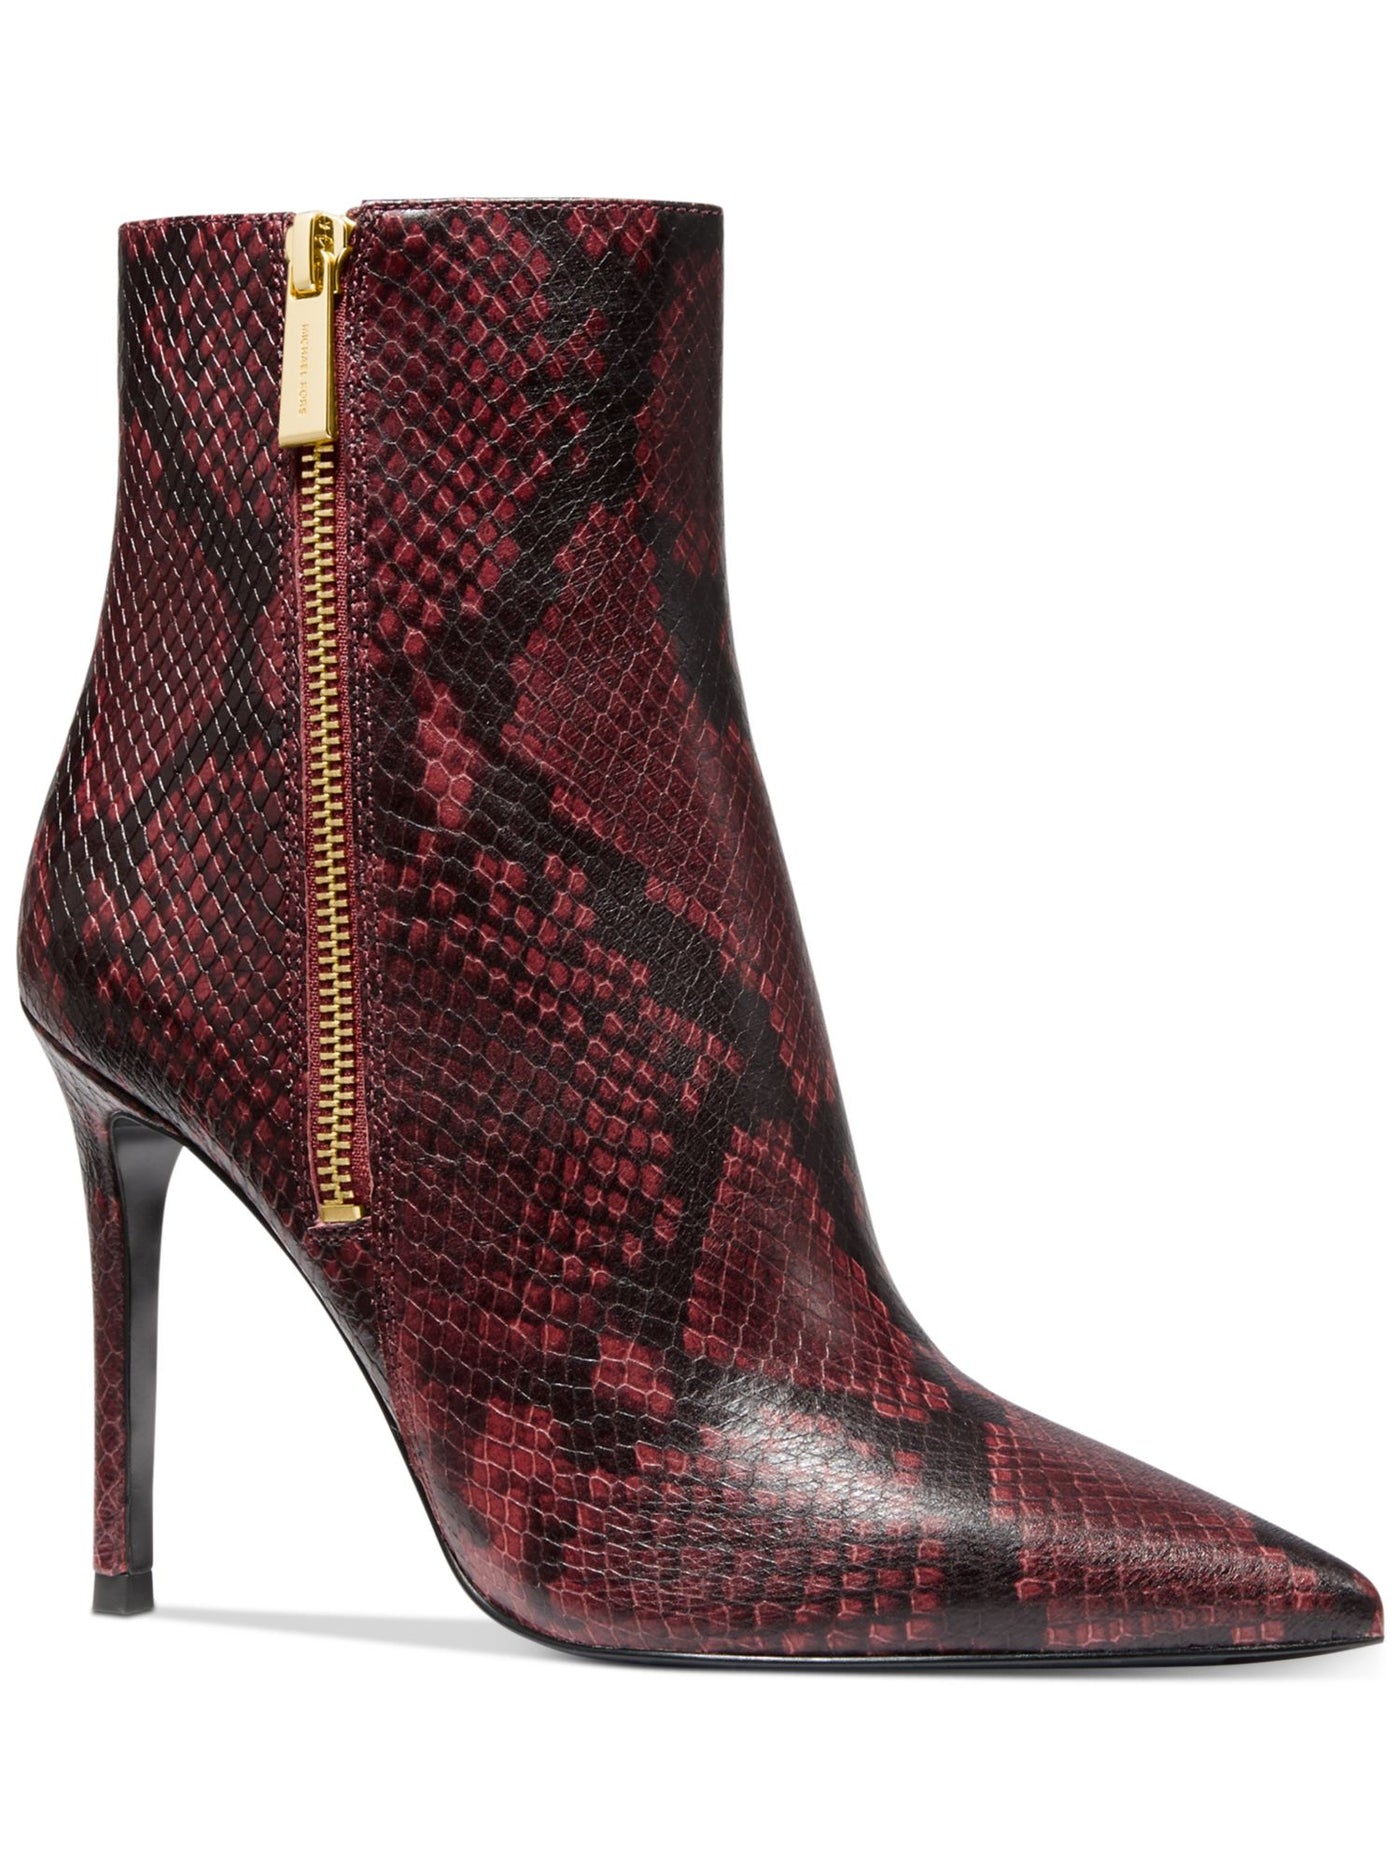 MICHAEL KORS Womens Maroon Snakeskin Padded Comfort Keke Pointed Toe Stiletto Leather Booties 8 M